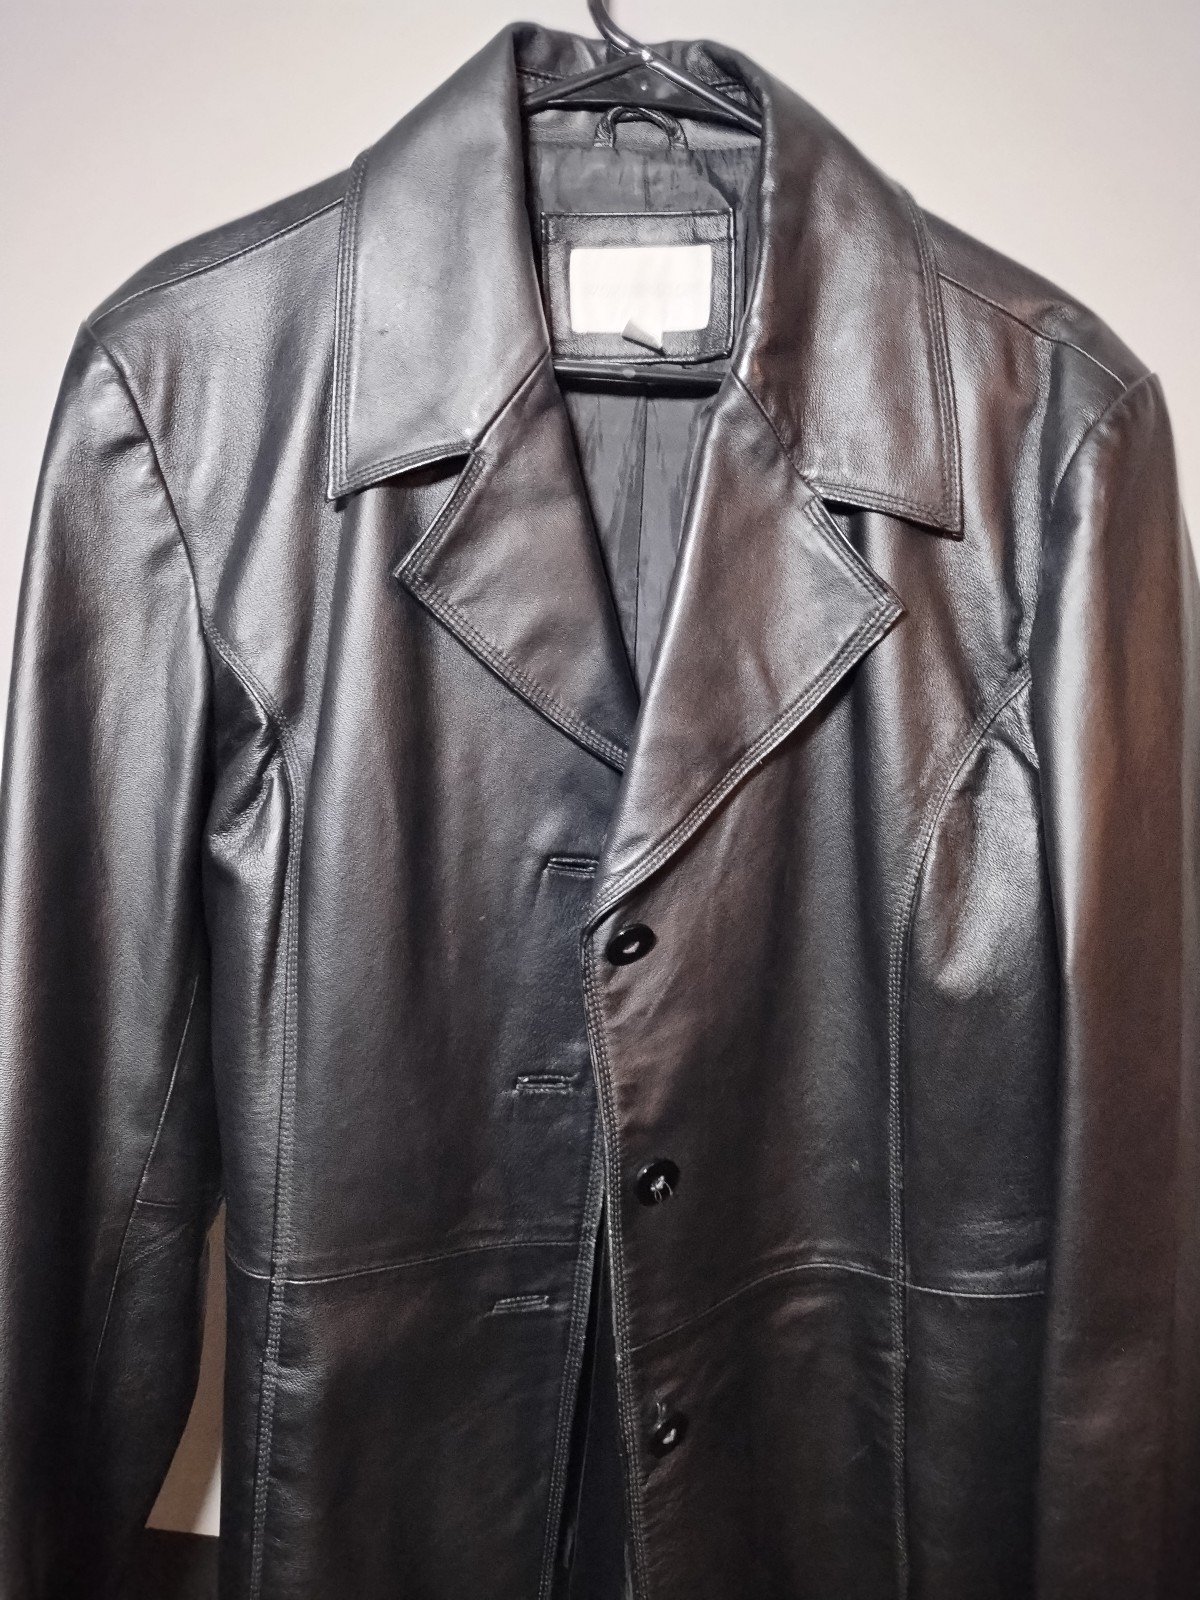 Worthington Women´s Black Leather Jacket - Size XL (16597) r8ppmqQn7